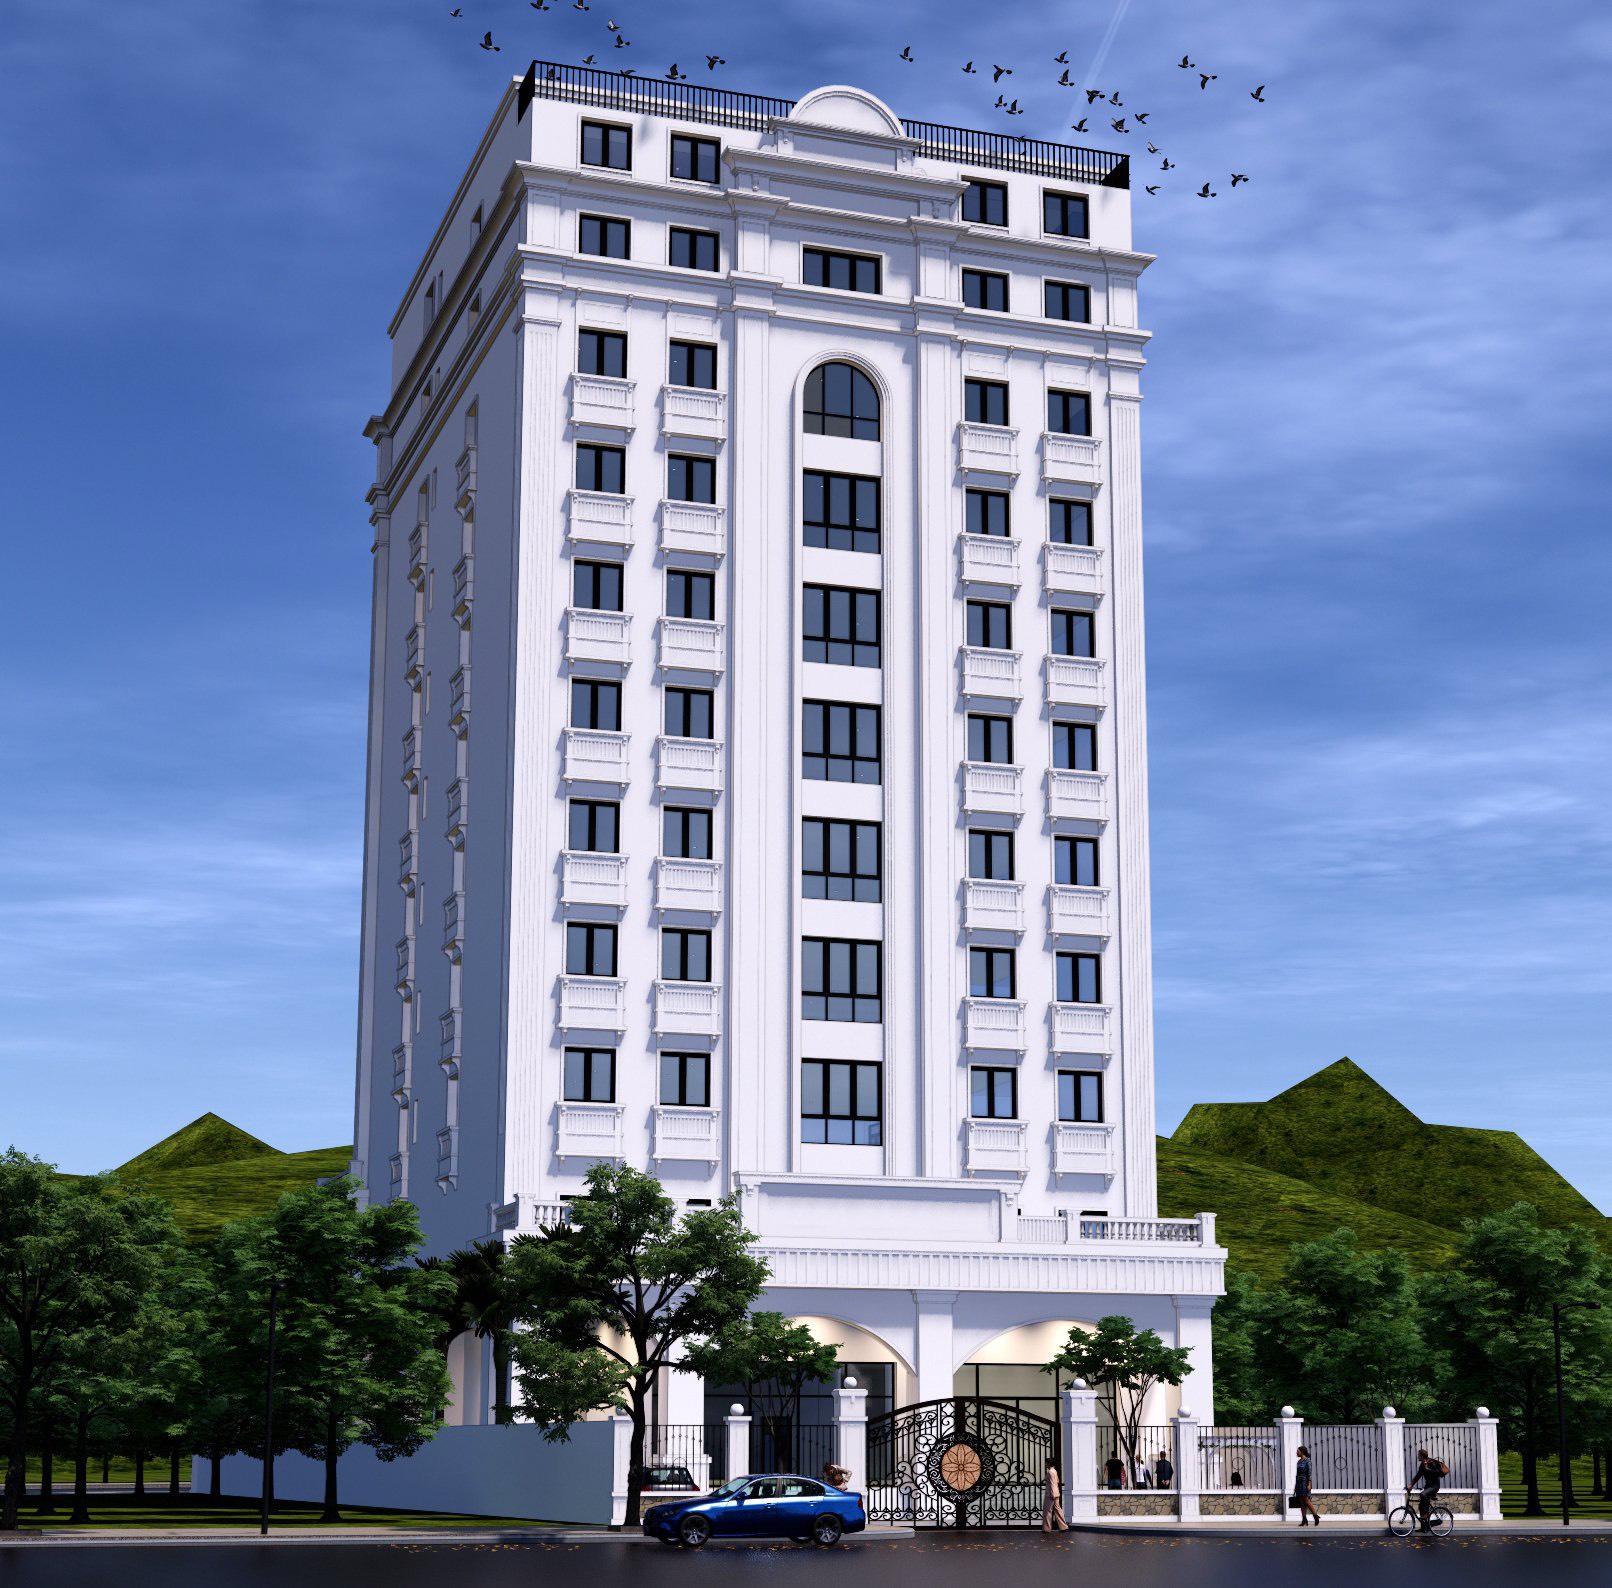 4-star stay at Glenda Tower Moc Chau Hotel managed by VOH